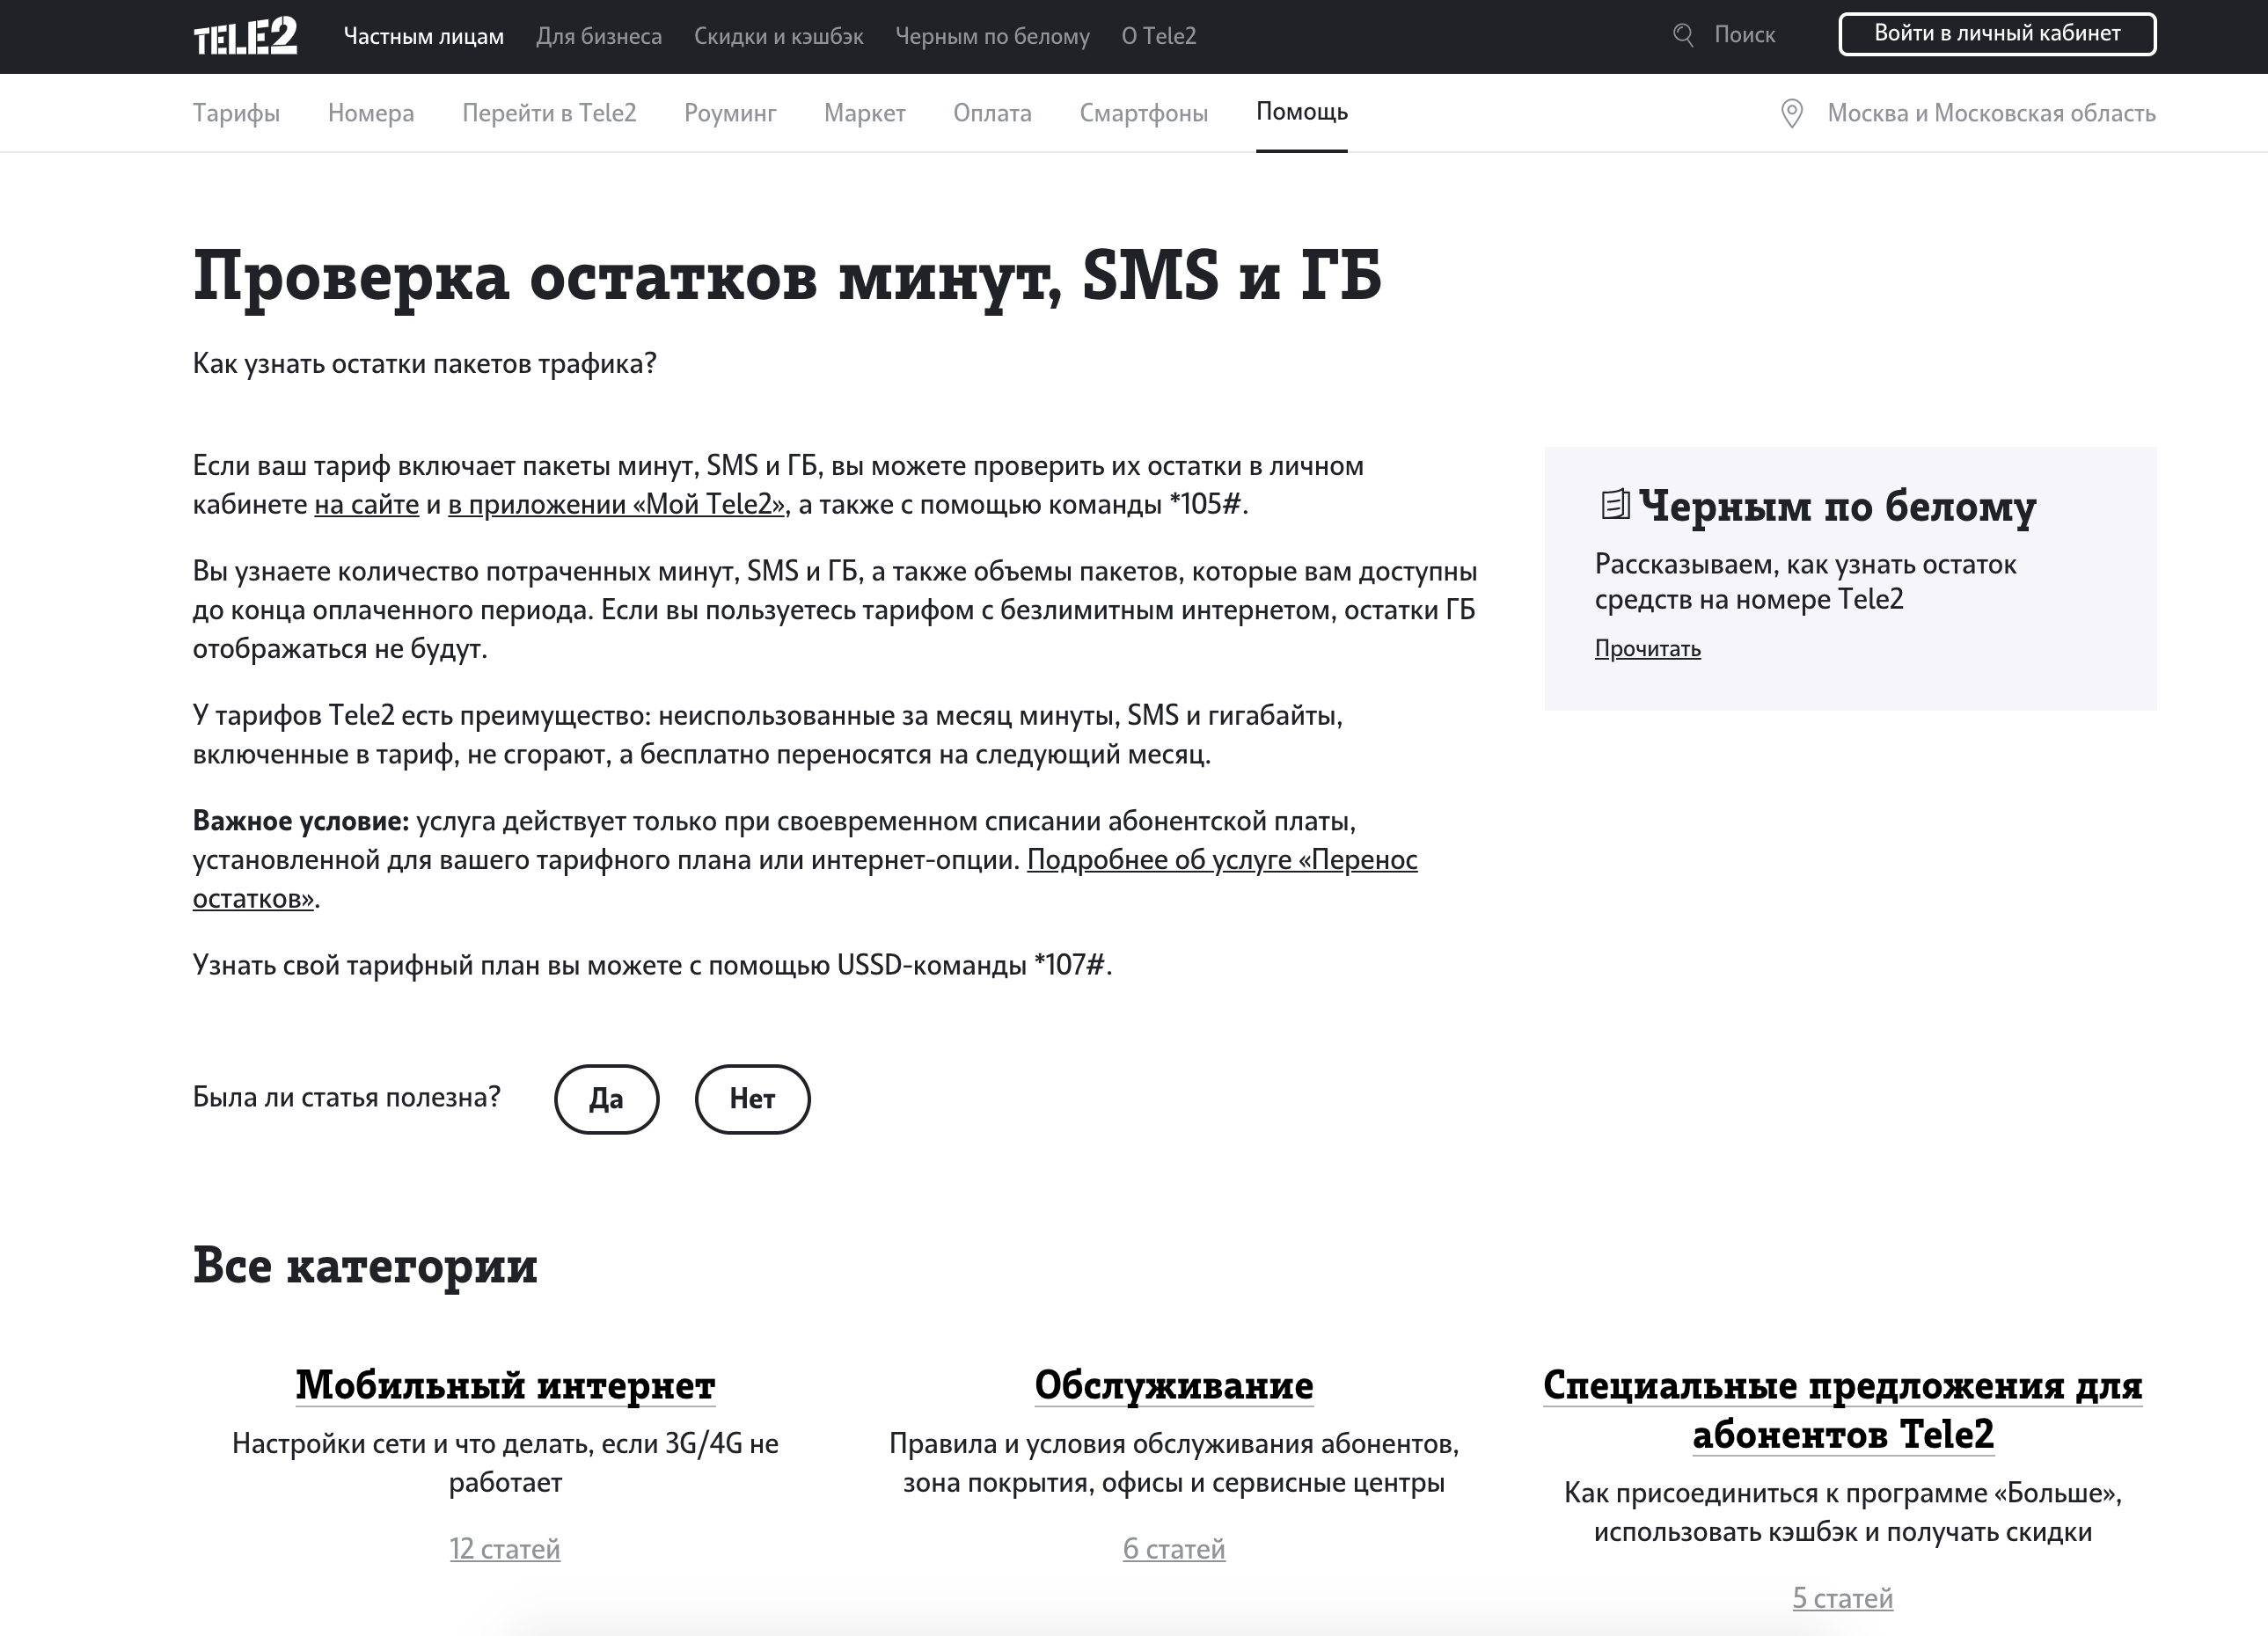 Как проверить баланс на теле2? - tele2wiki.ru